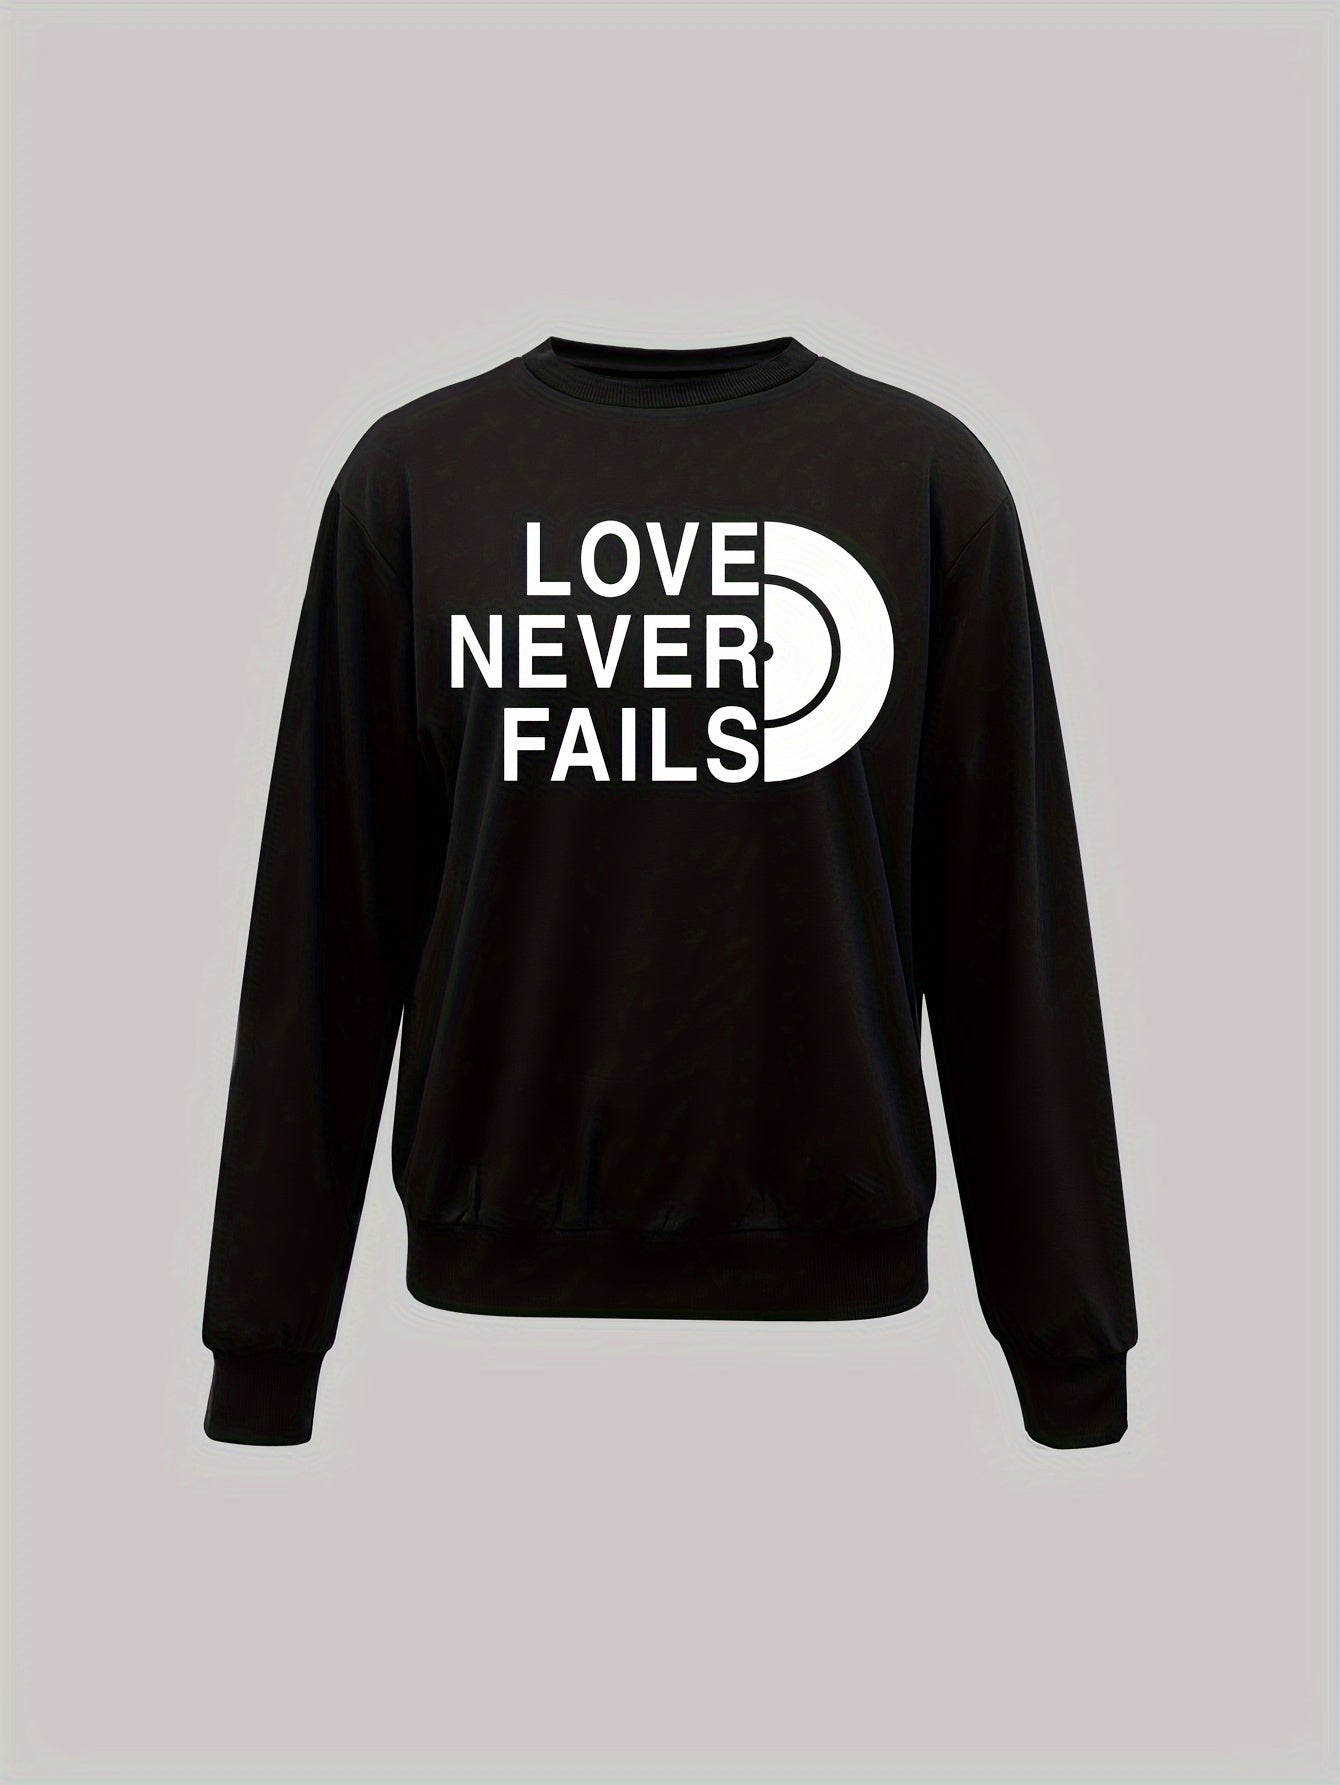 Love Never Fails Women's Christian Pullover Sweatshirt claimedbygoddesigns